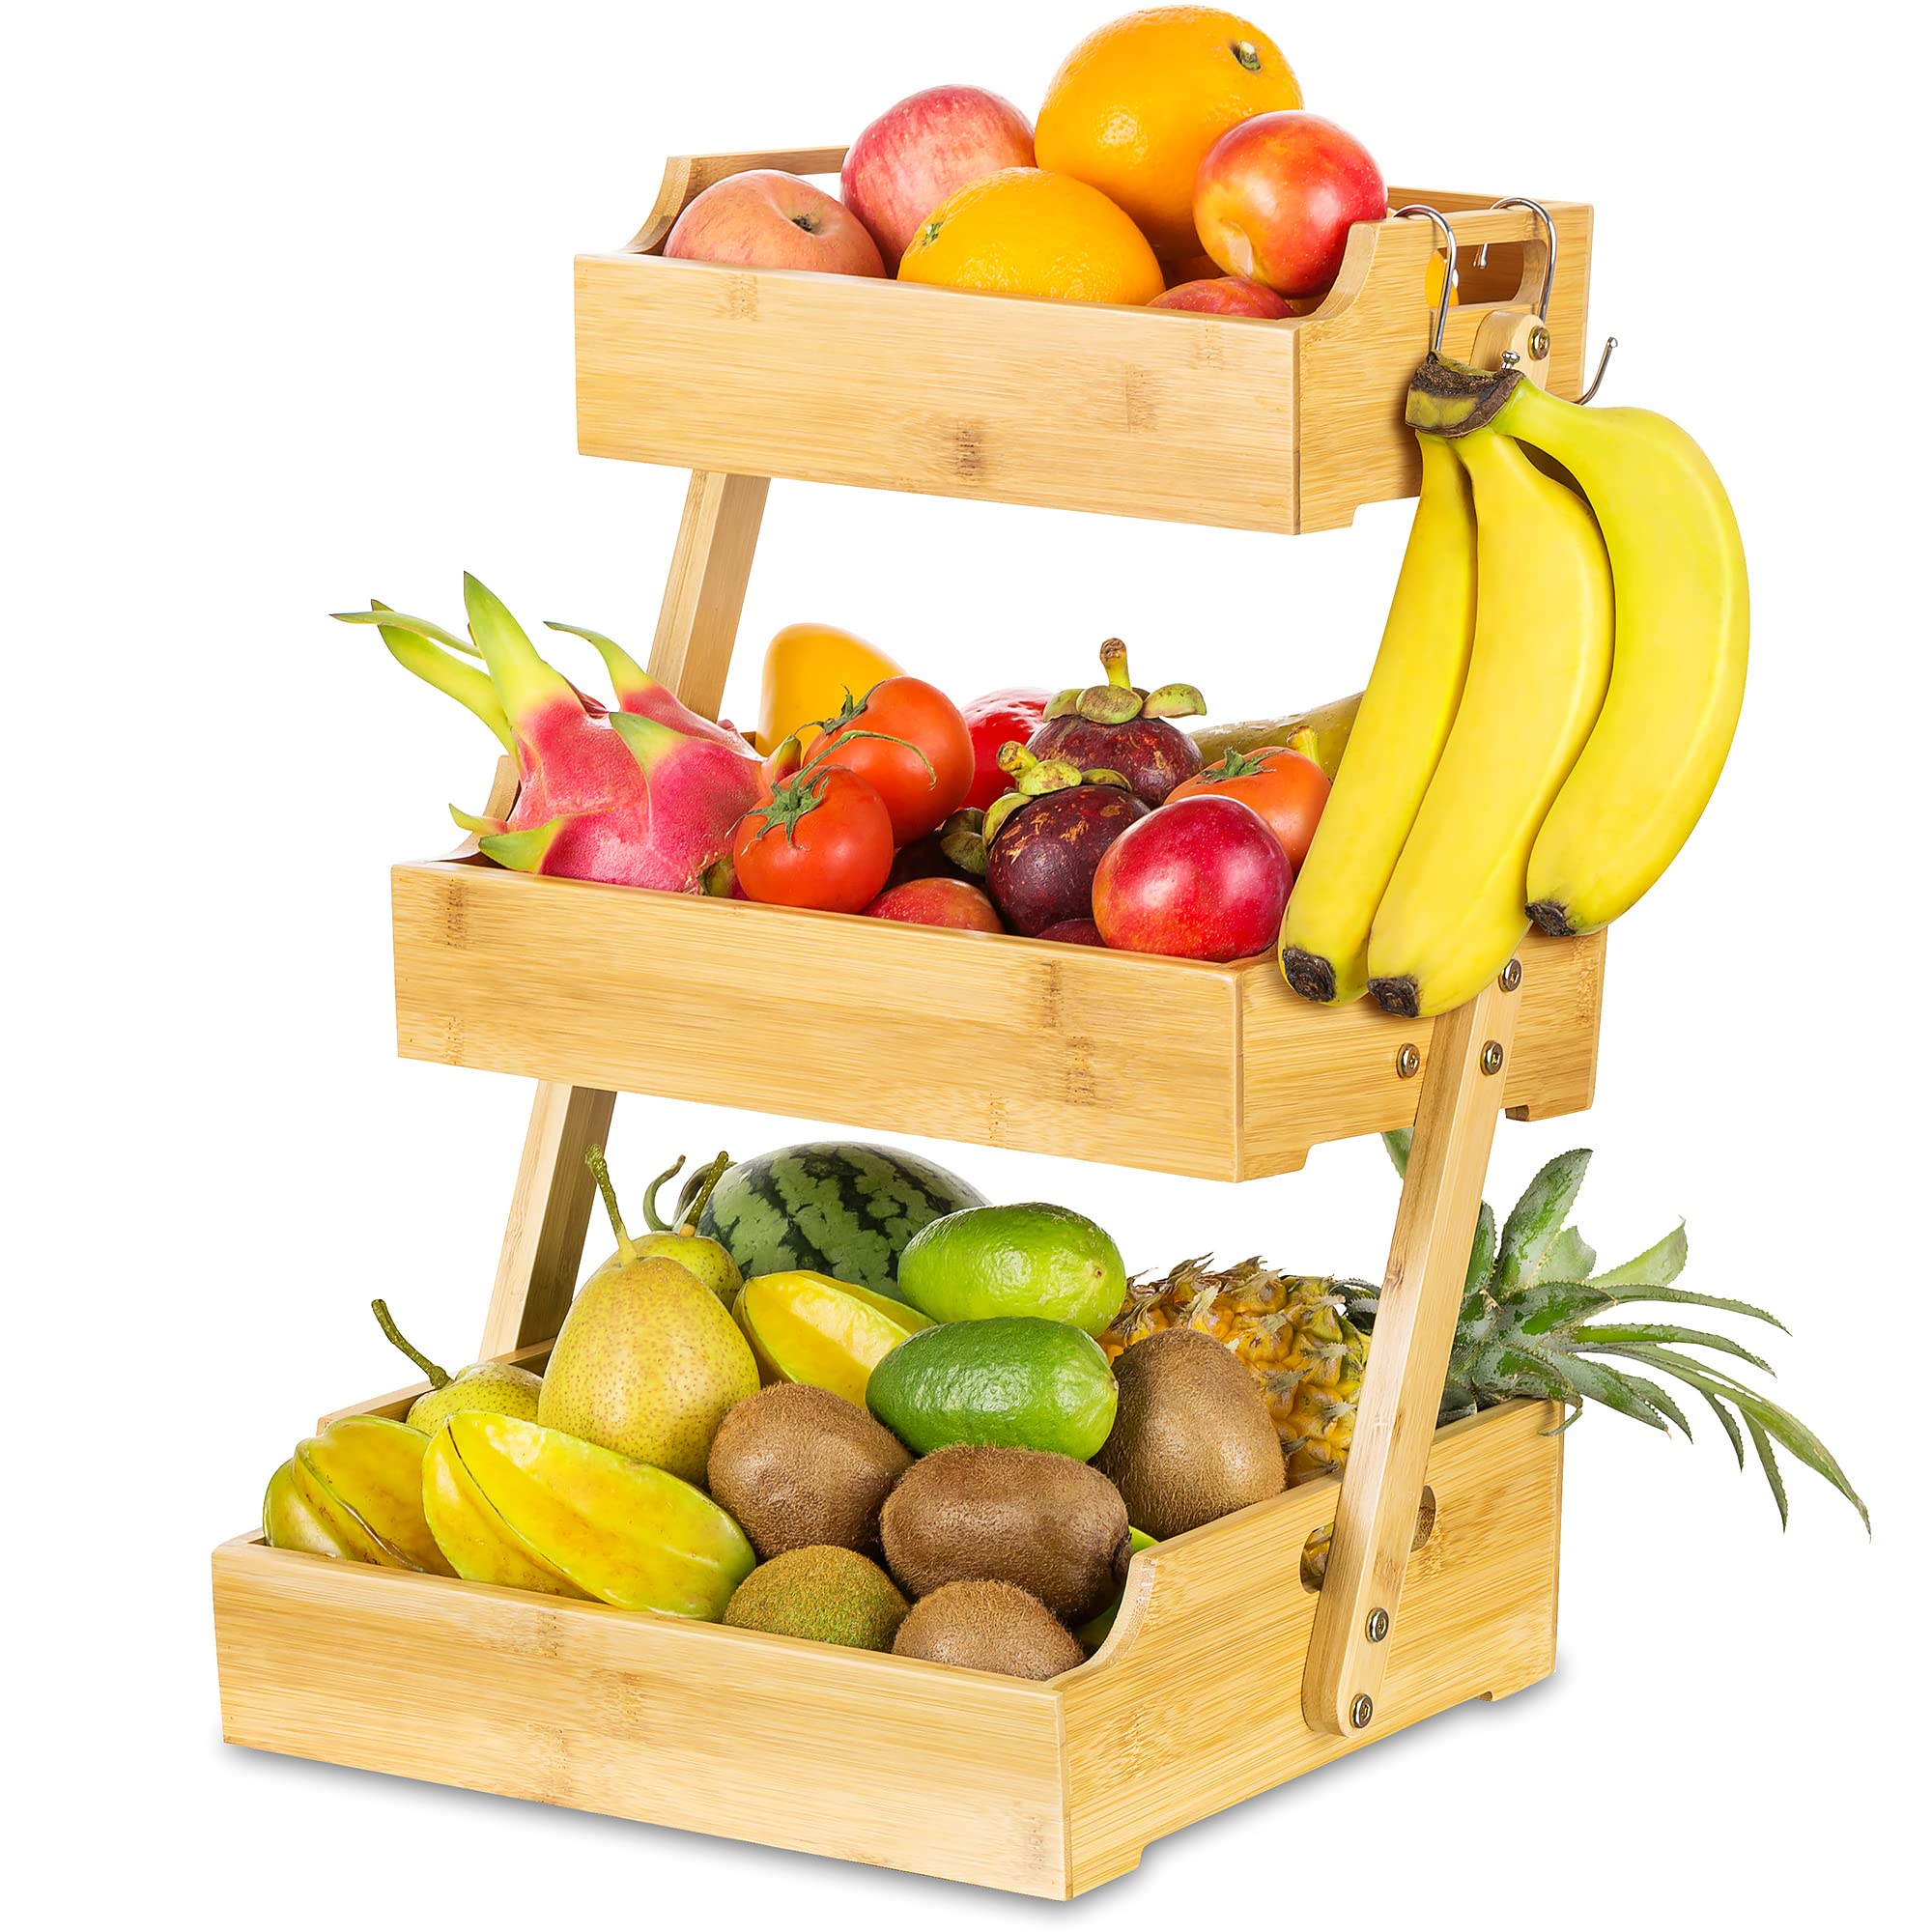 Shangrun Vegetable Bread Storage Basket Banana Holder Stand